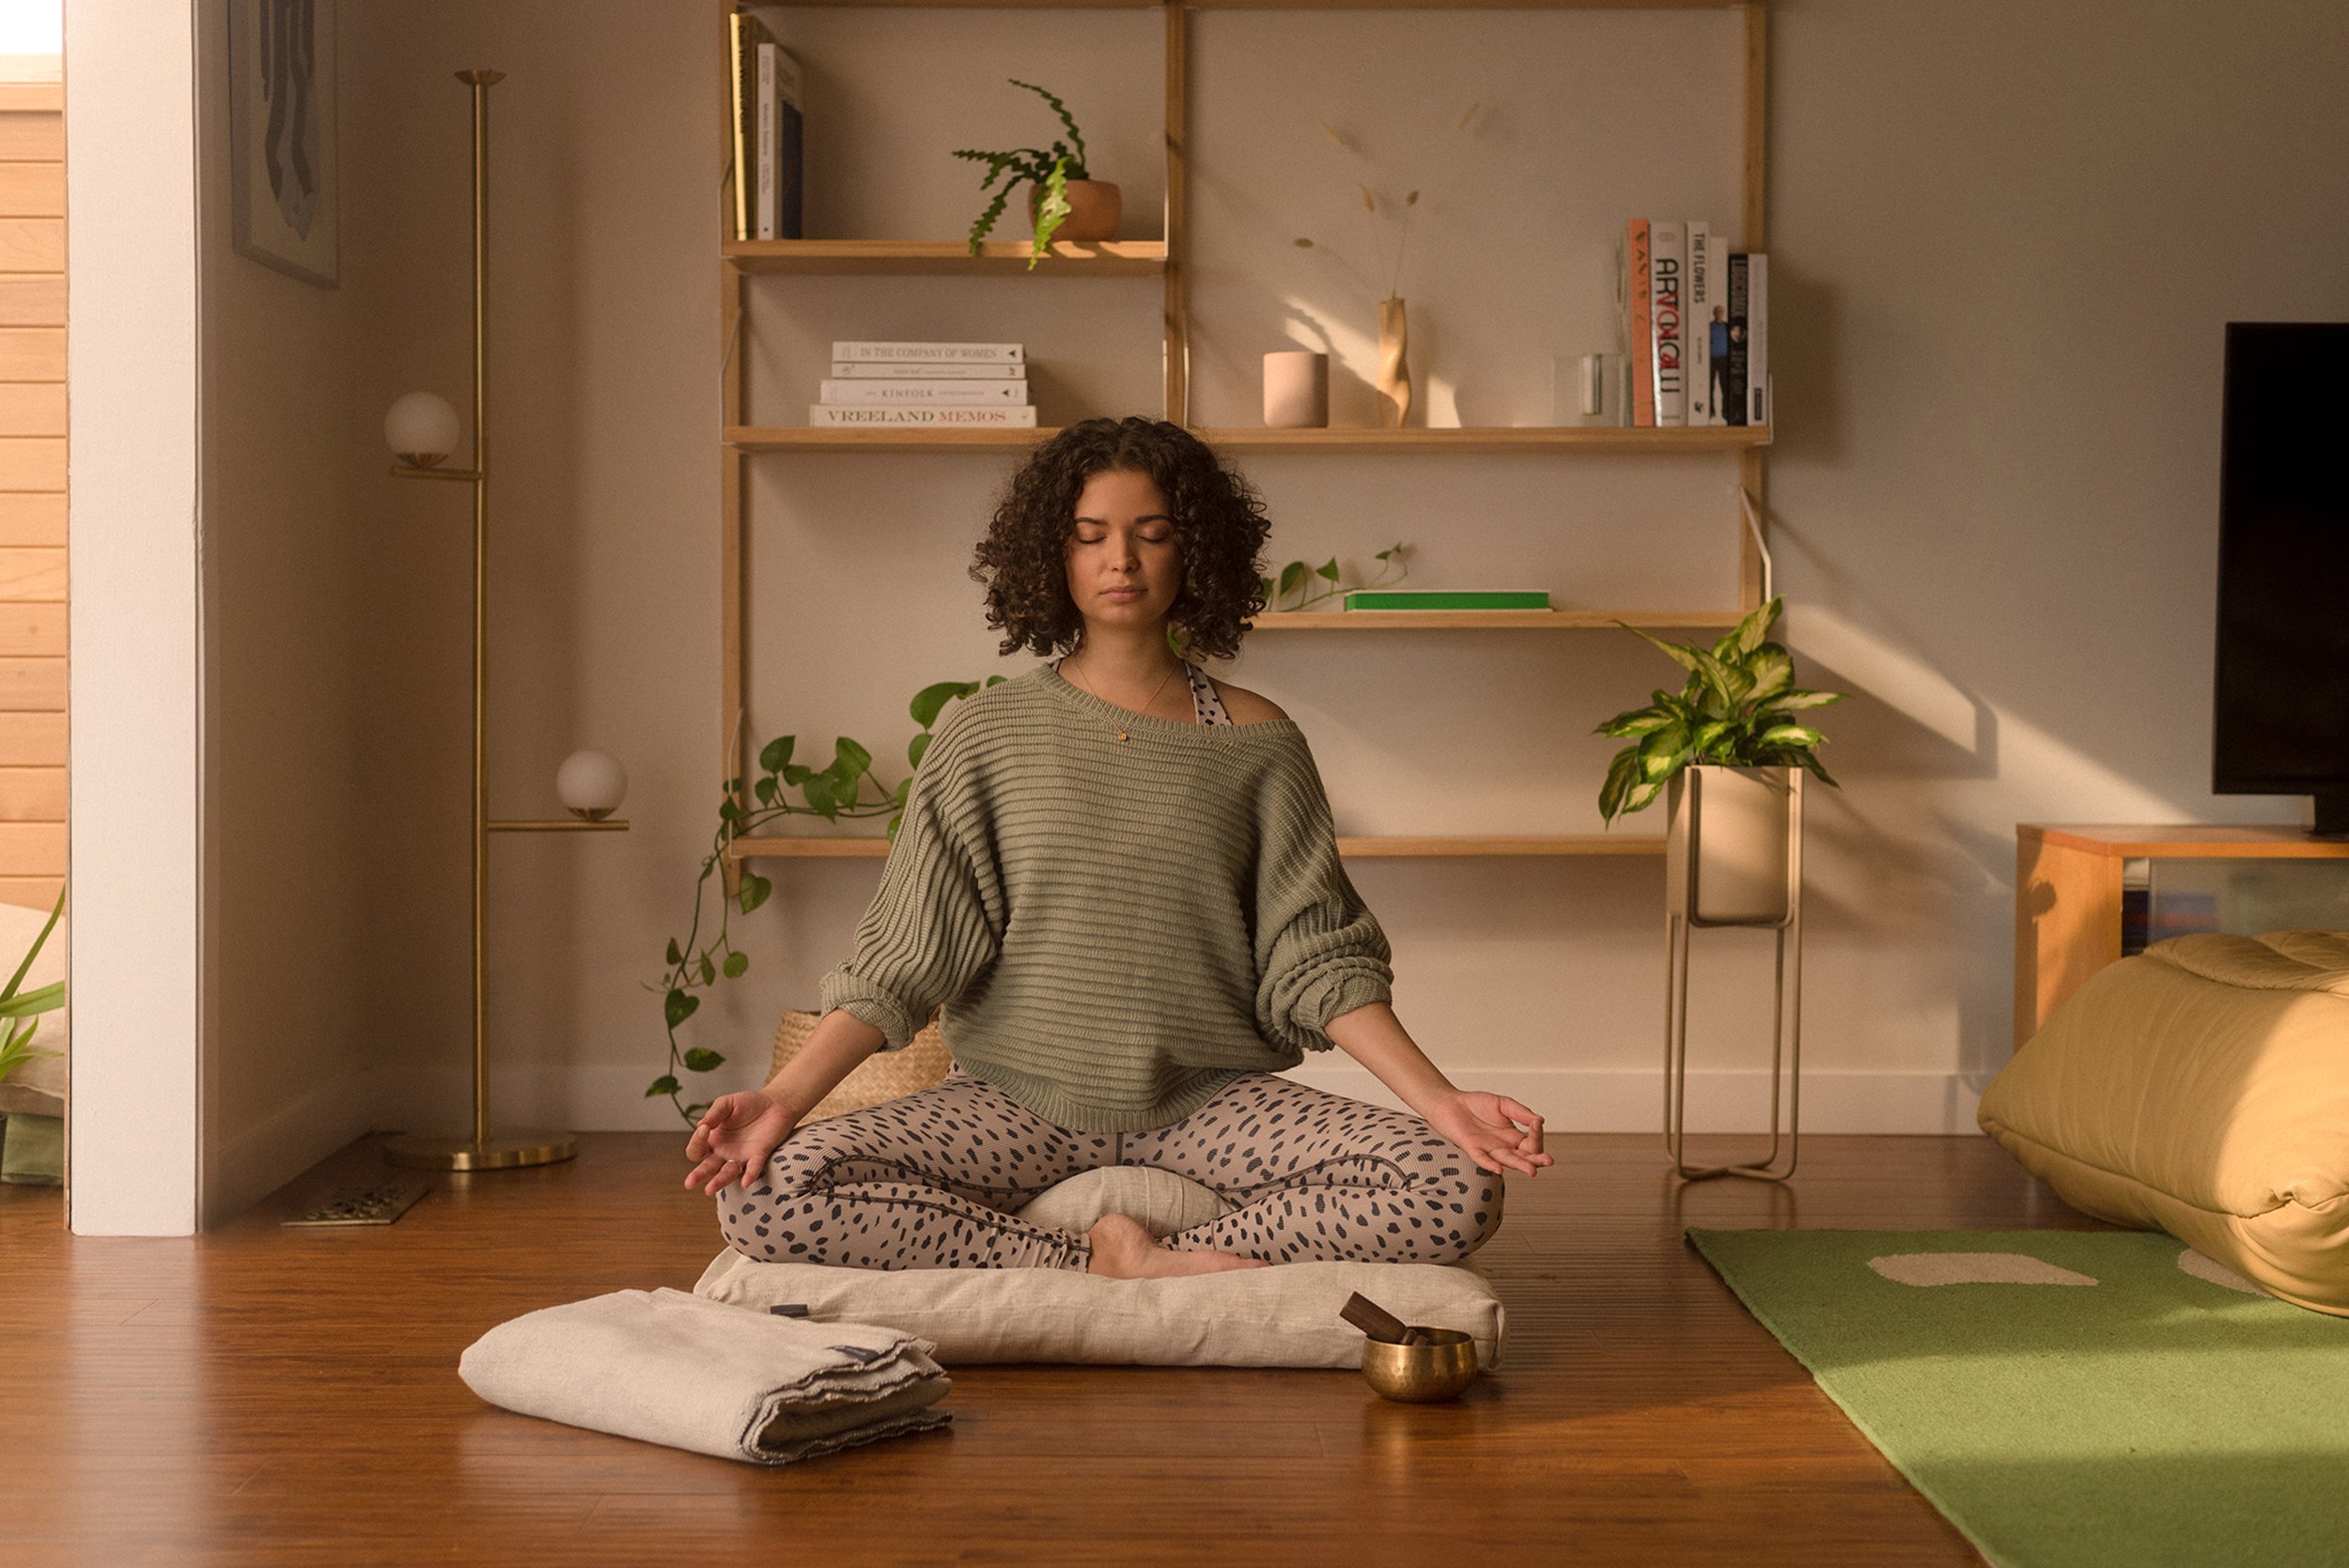 Meditation gifting category for Halfmoon Holiday 2020